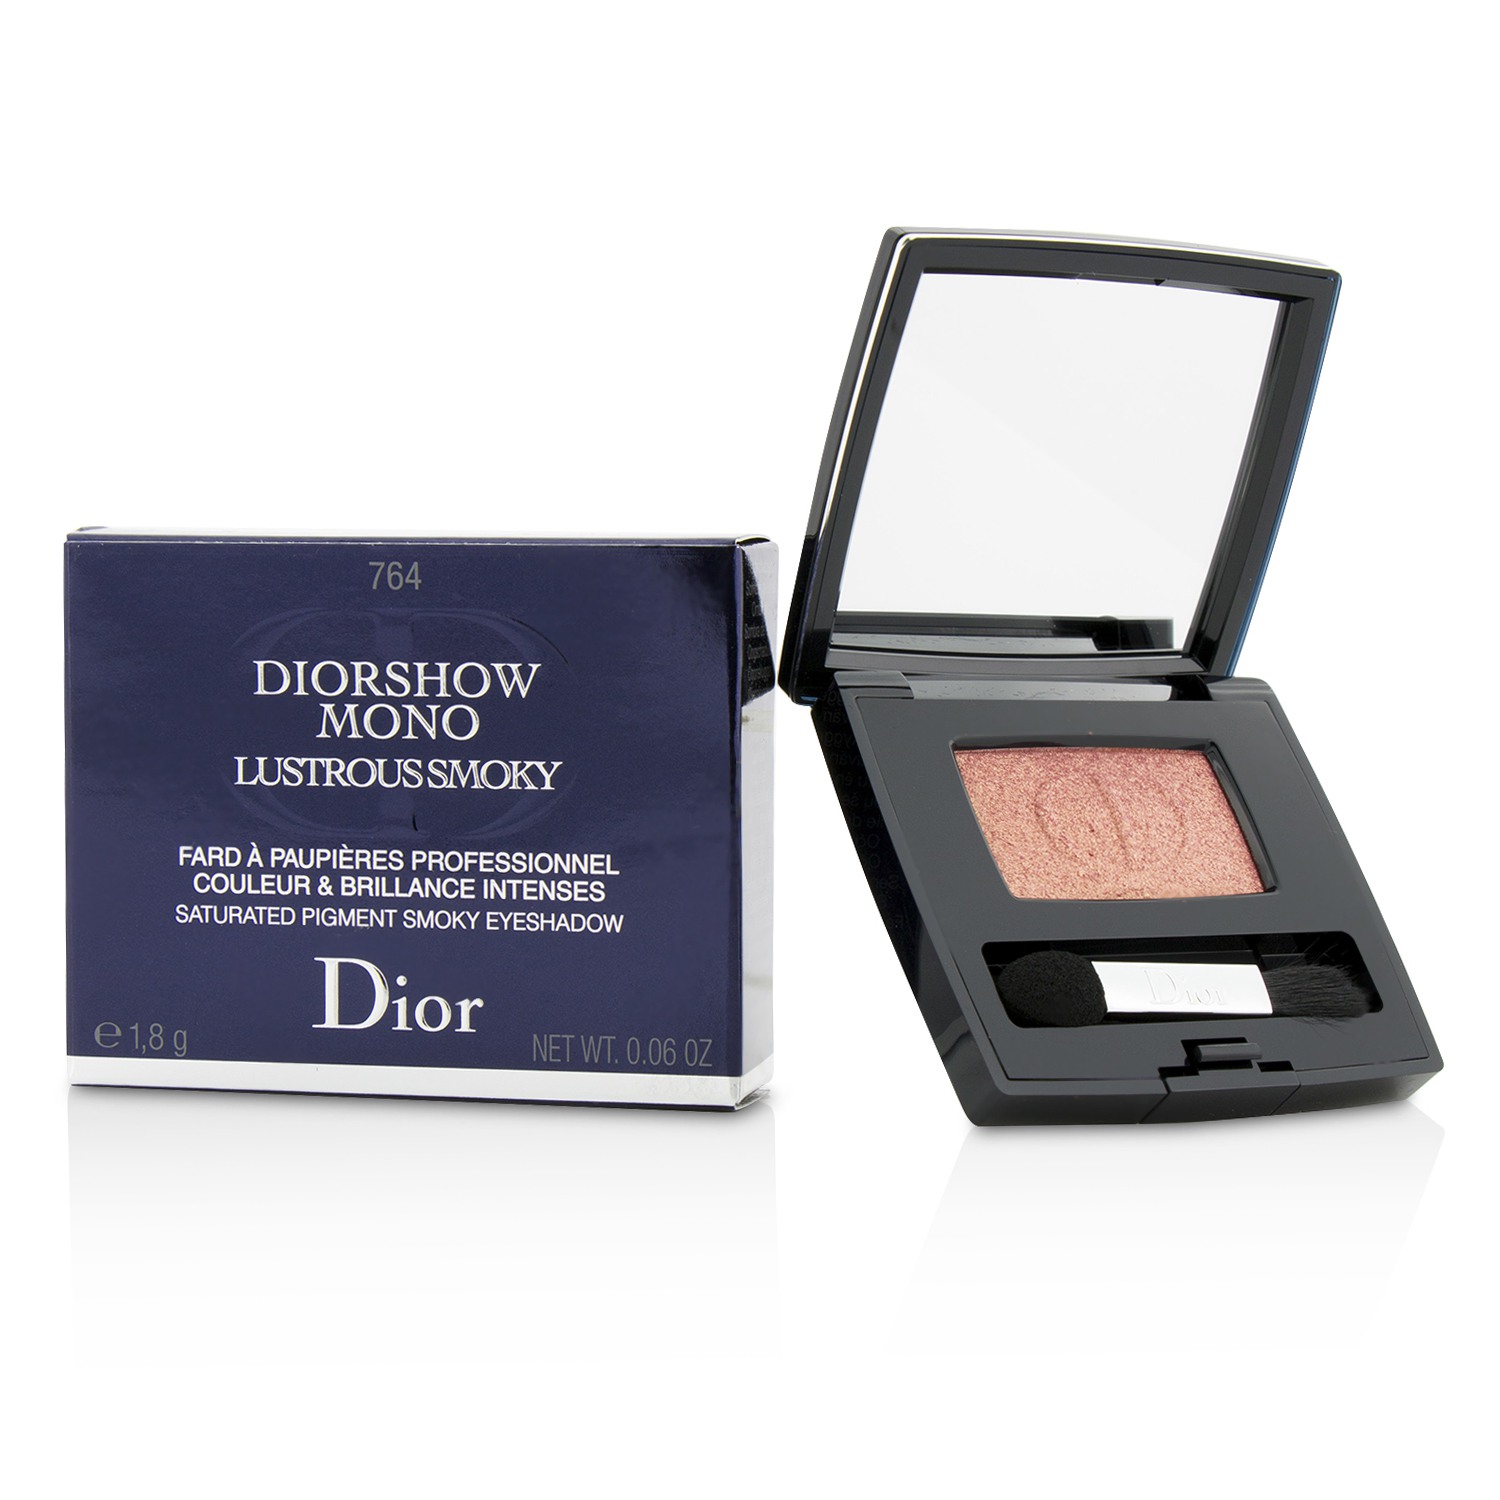 Diorshow Mono Lustrous Smoky Saturated Pigment Smoky Eyeshadow - # 764 Fusion Christian Dior Image